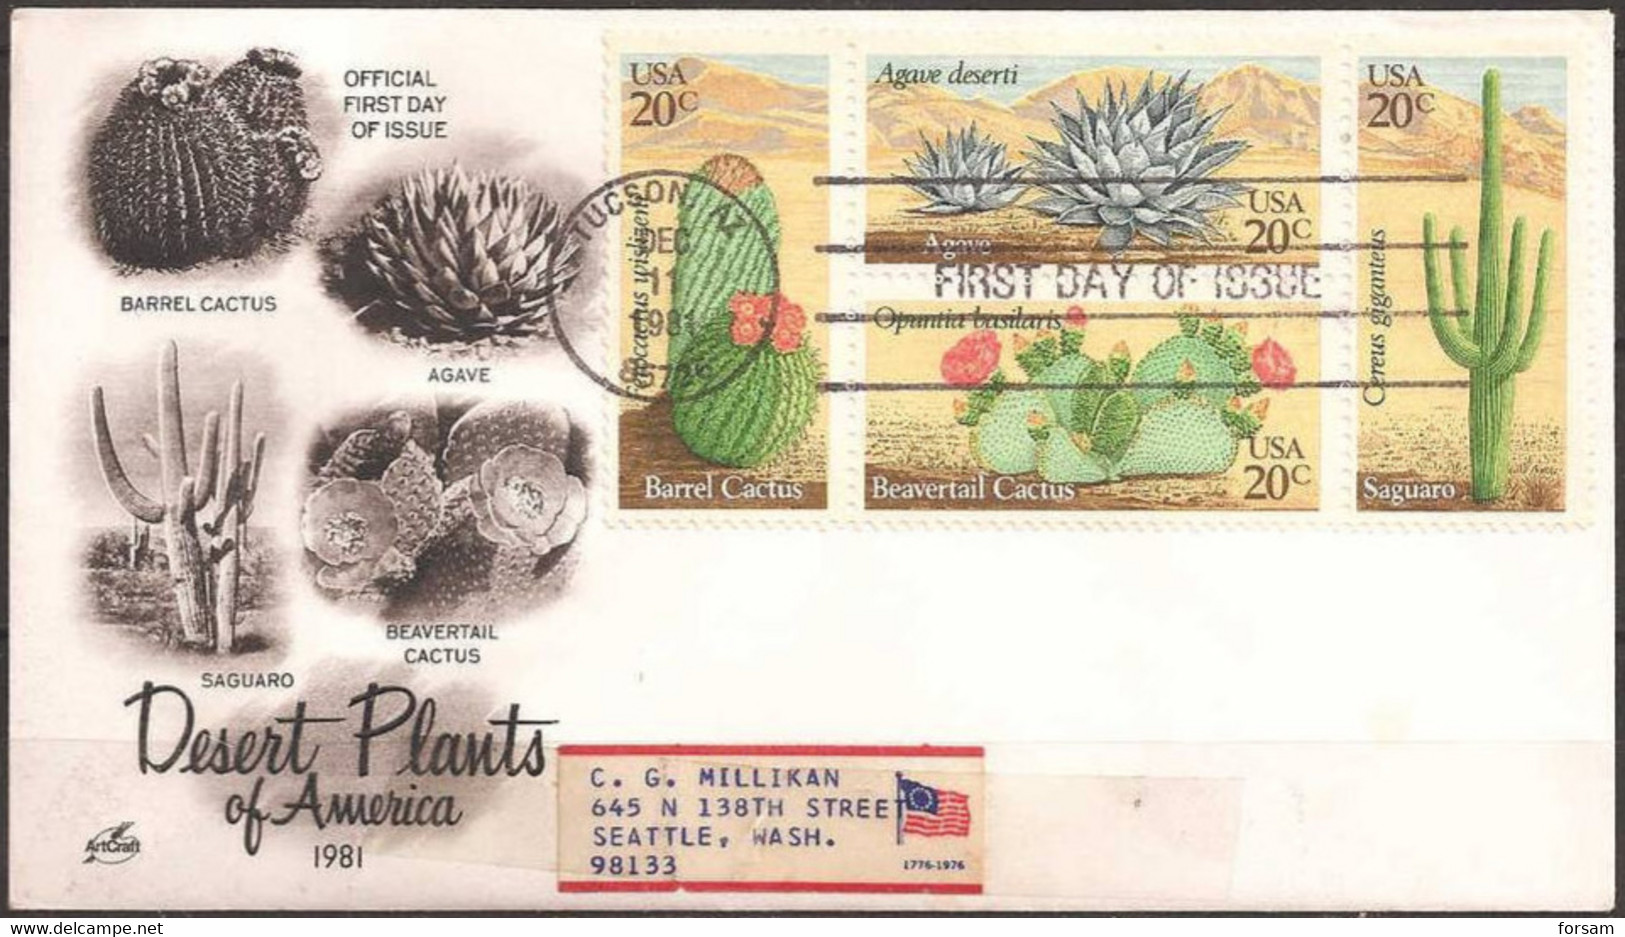 USA..1981..DECERT PLANTS Of  AMERICA ...FDC. - Sukkulenten